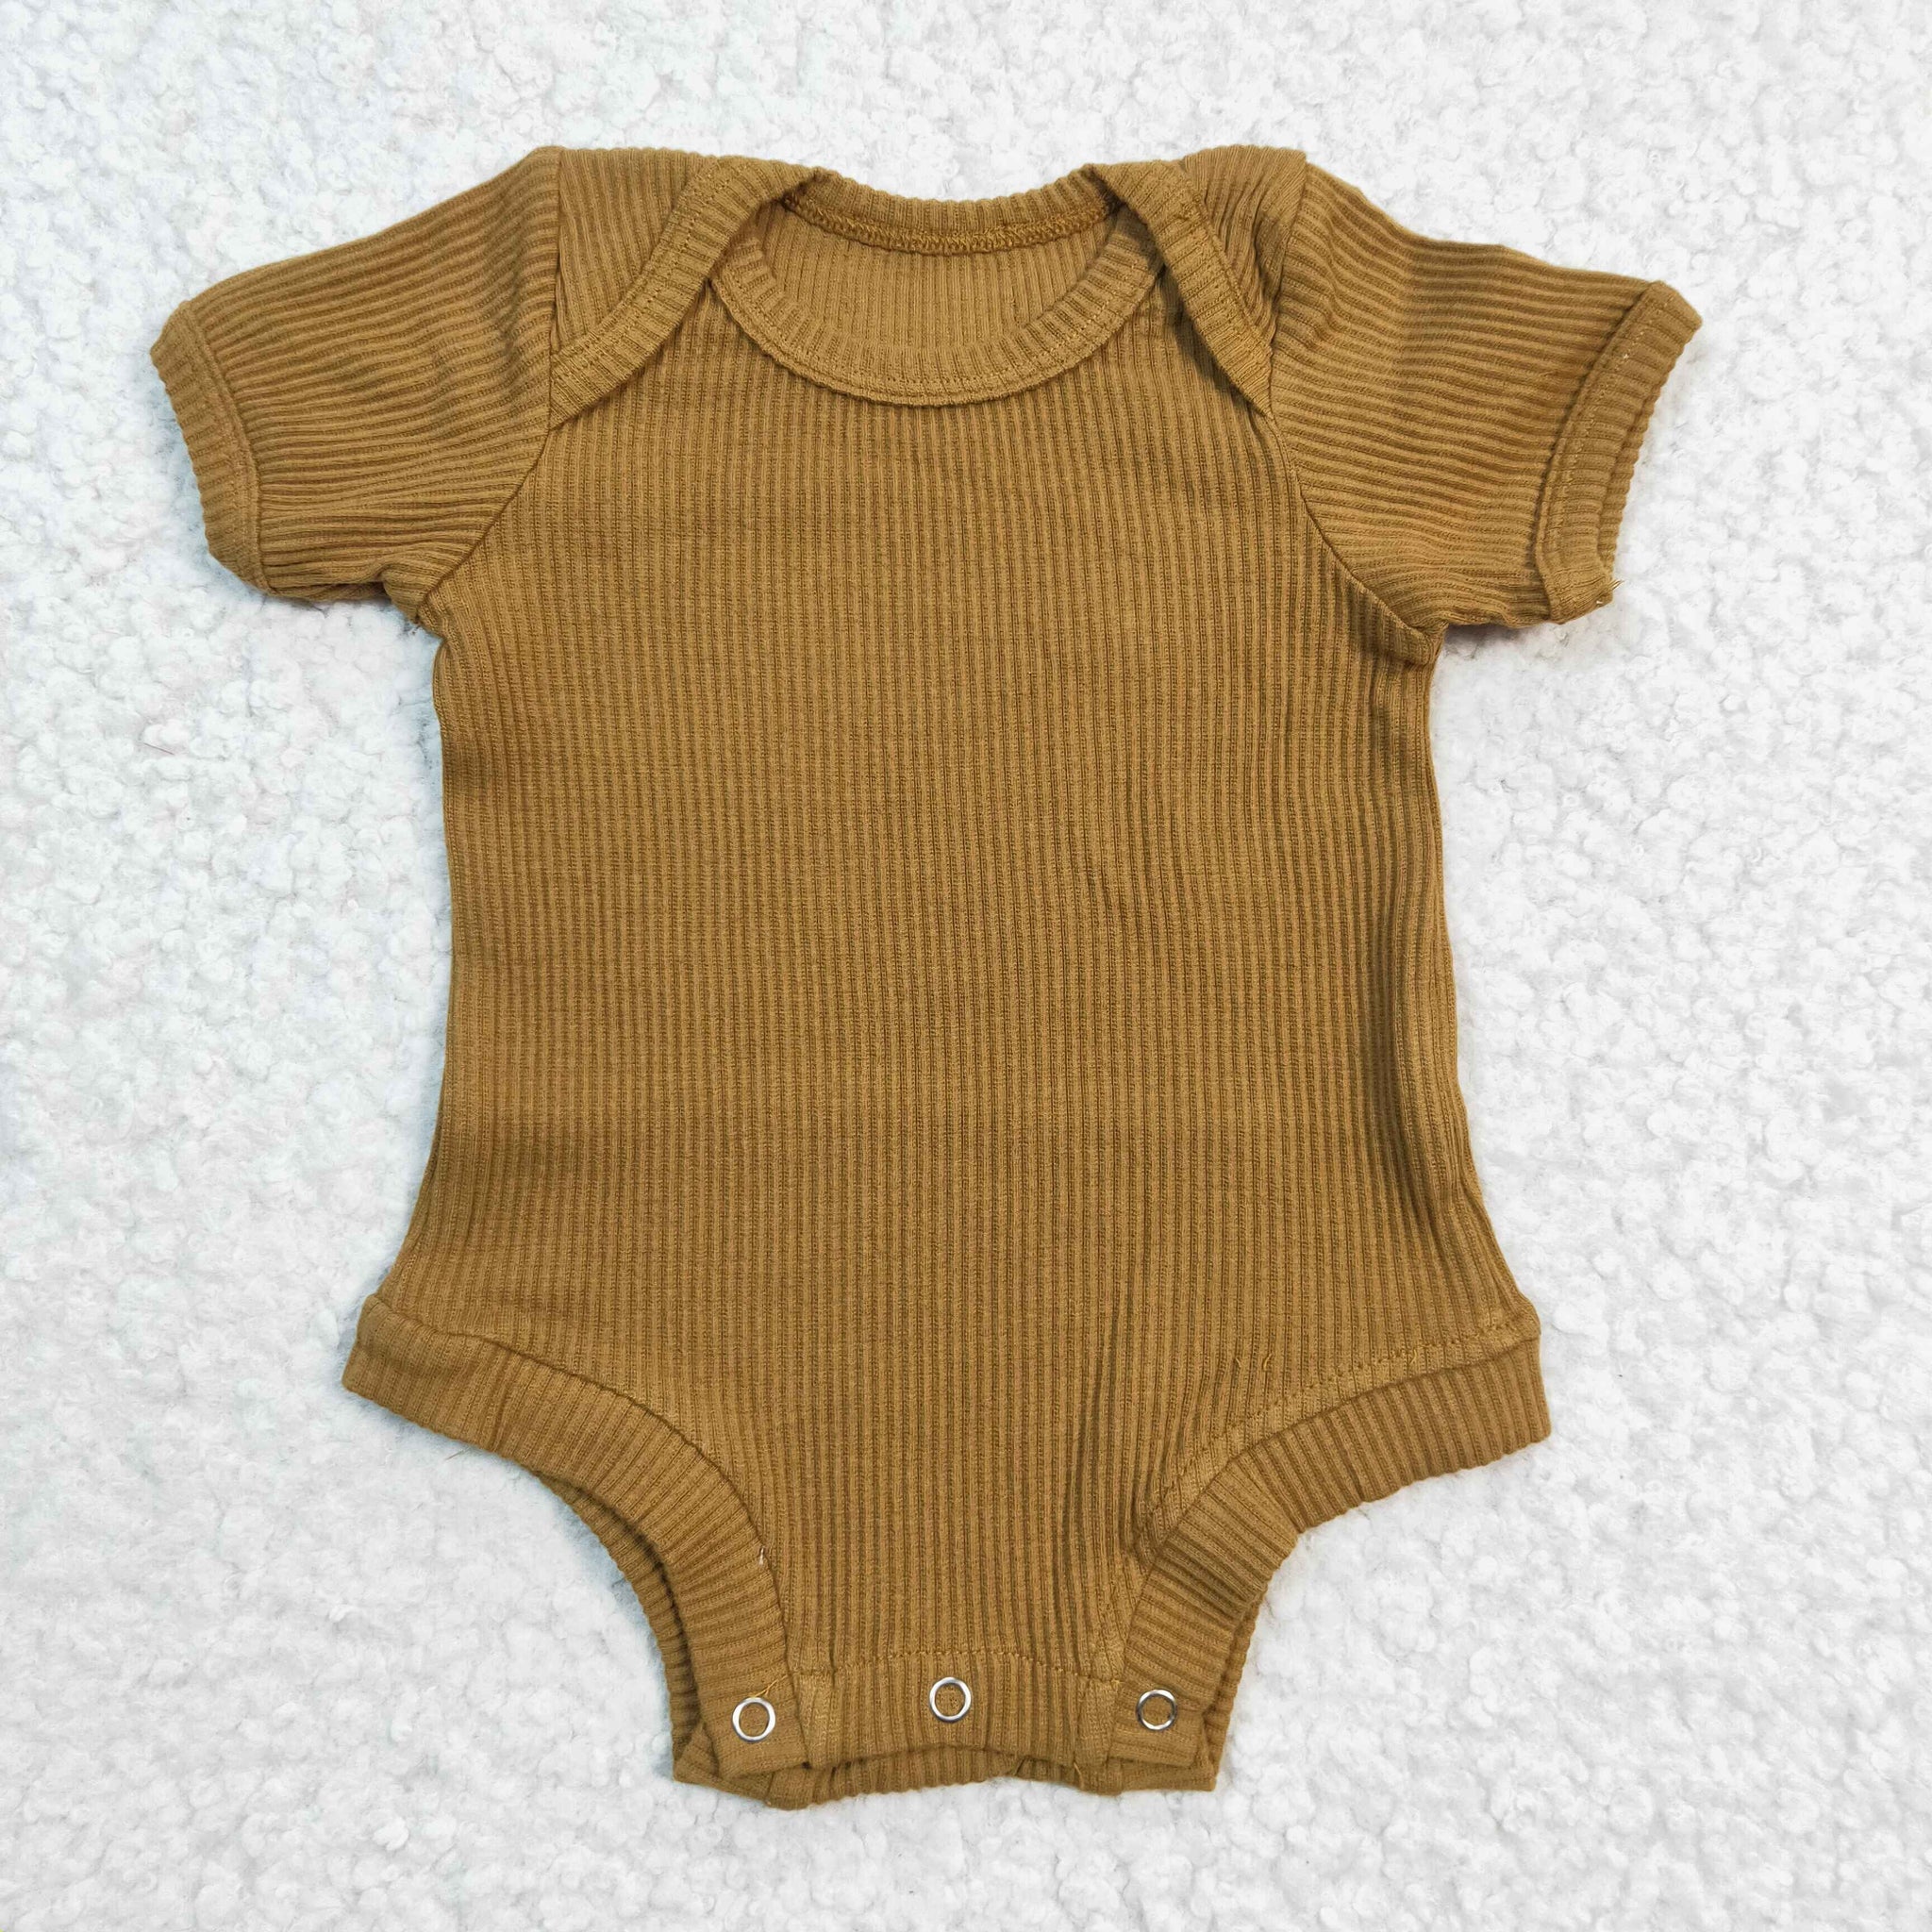 SR0207 baby clothes brown bubble